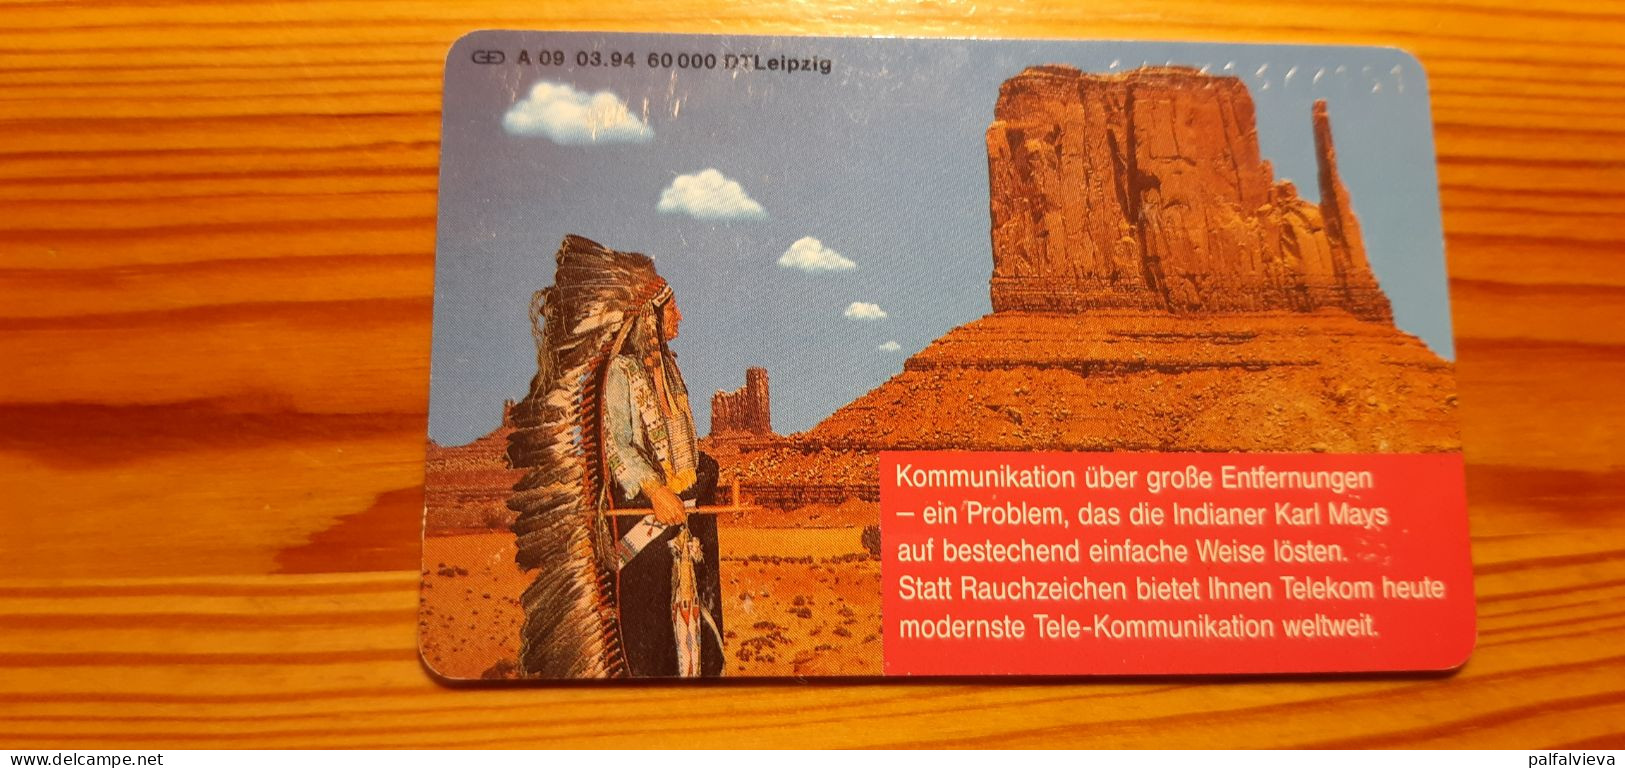 Phonecard Germany A 09 03.94. Karl May, Native American, USA 60.000 Ex. - A + AD-Series : Werbekarten Der Dt. Telekom AG